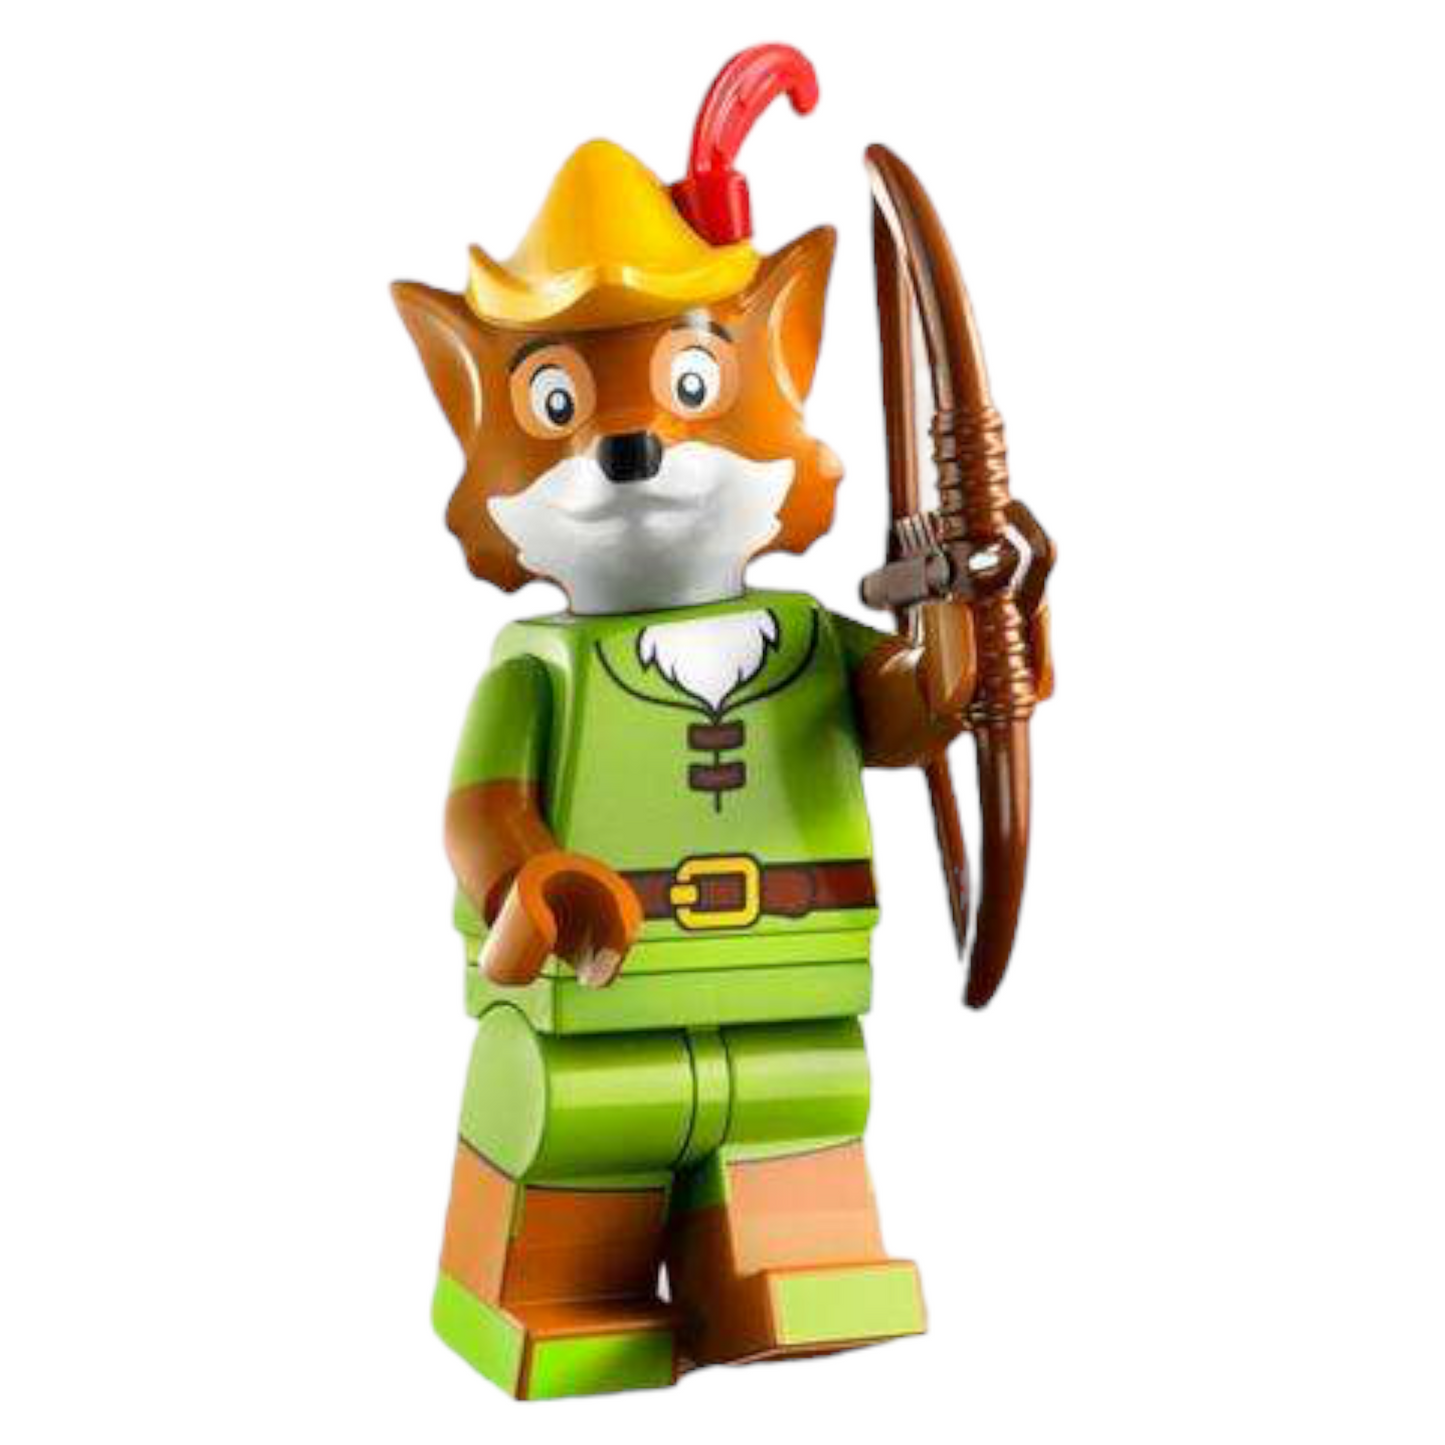 LEGO 71038 Disney - Robin Hood